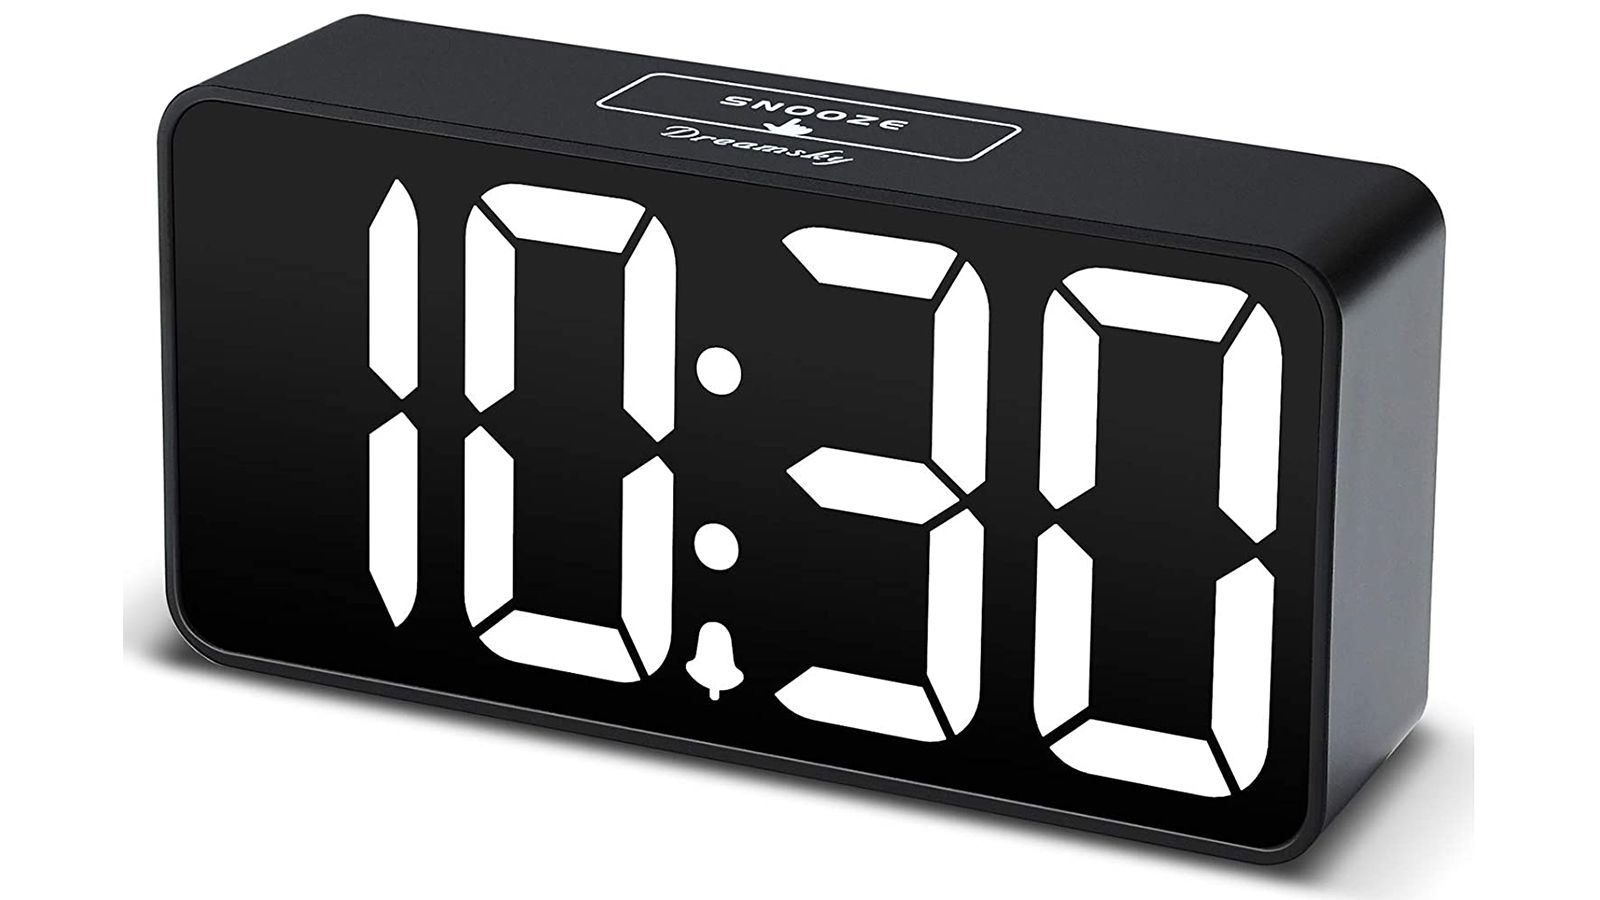 Easy To Read Digital Alarm Clock LED Backlight Control Night Light Decor